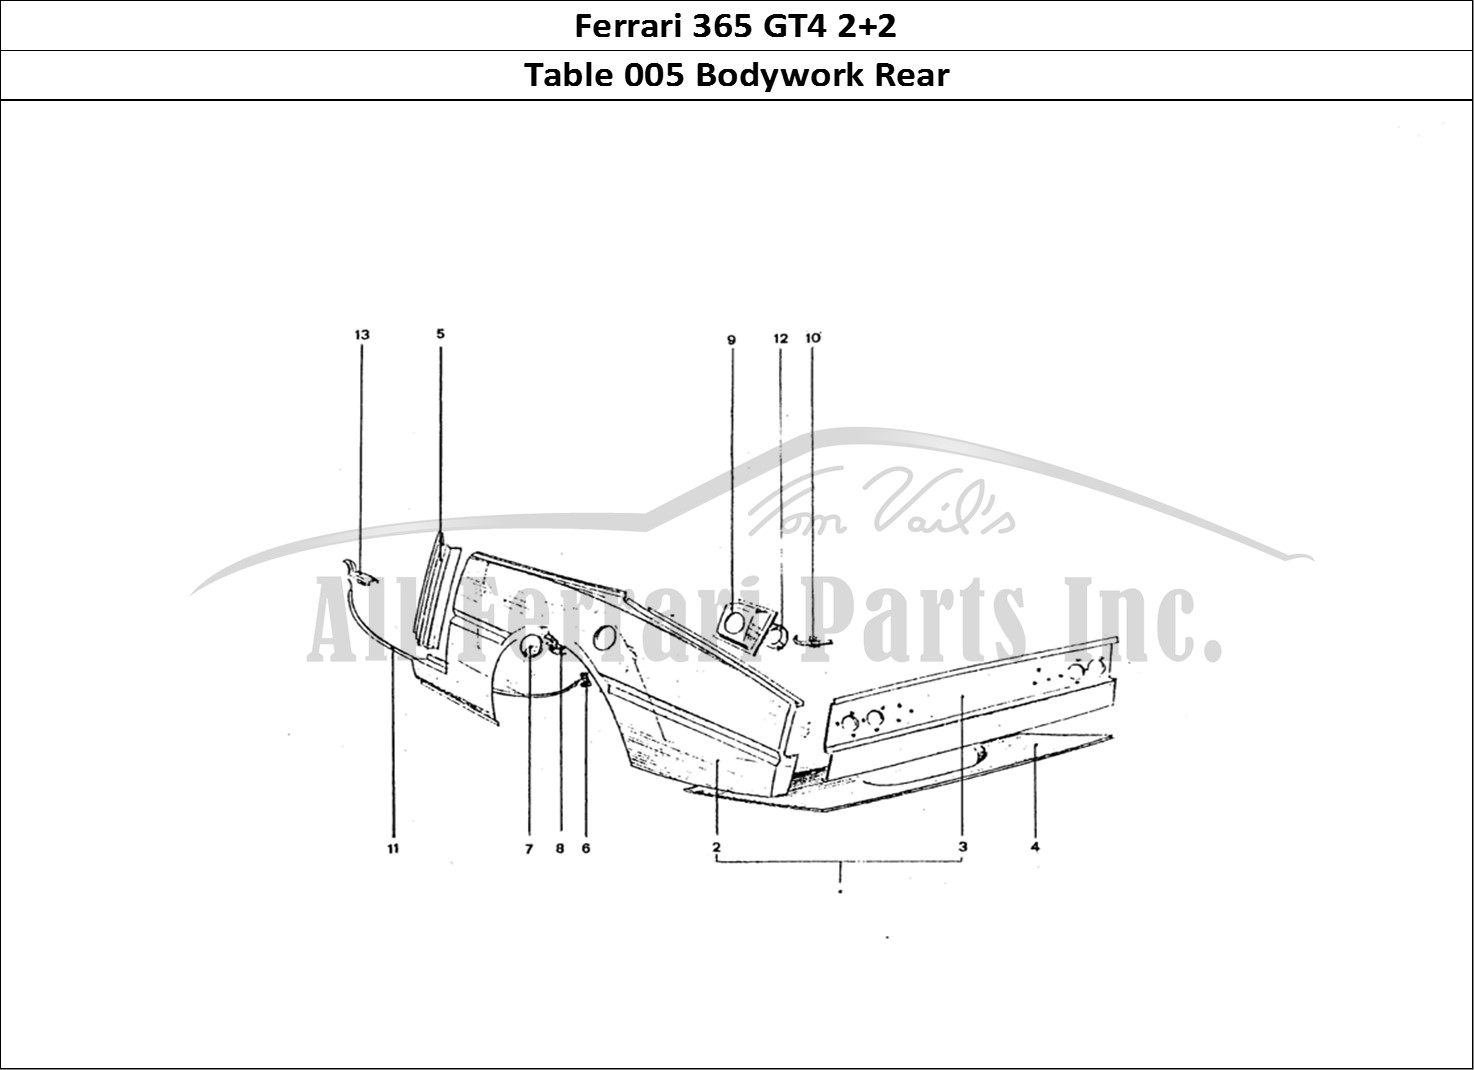 Ferrari Parts Ferrari 365 GT4 2+2 Coachwork Page 005 Rear End Panels